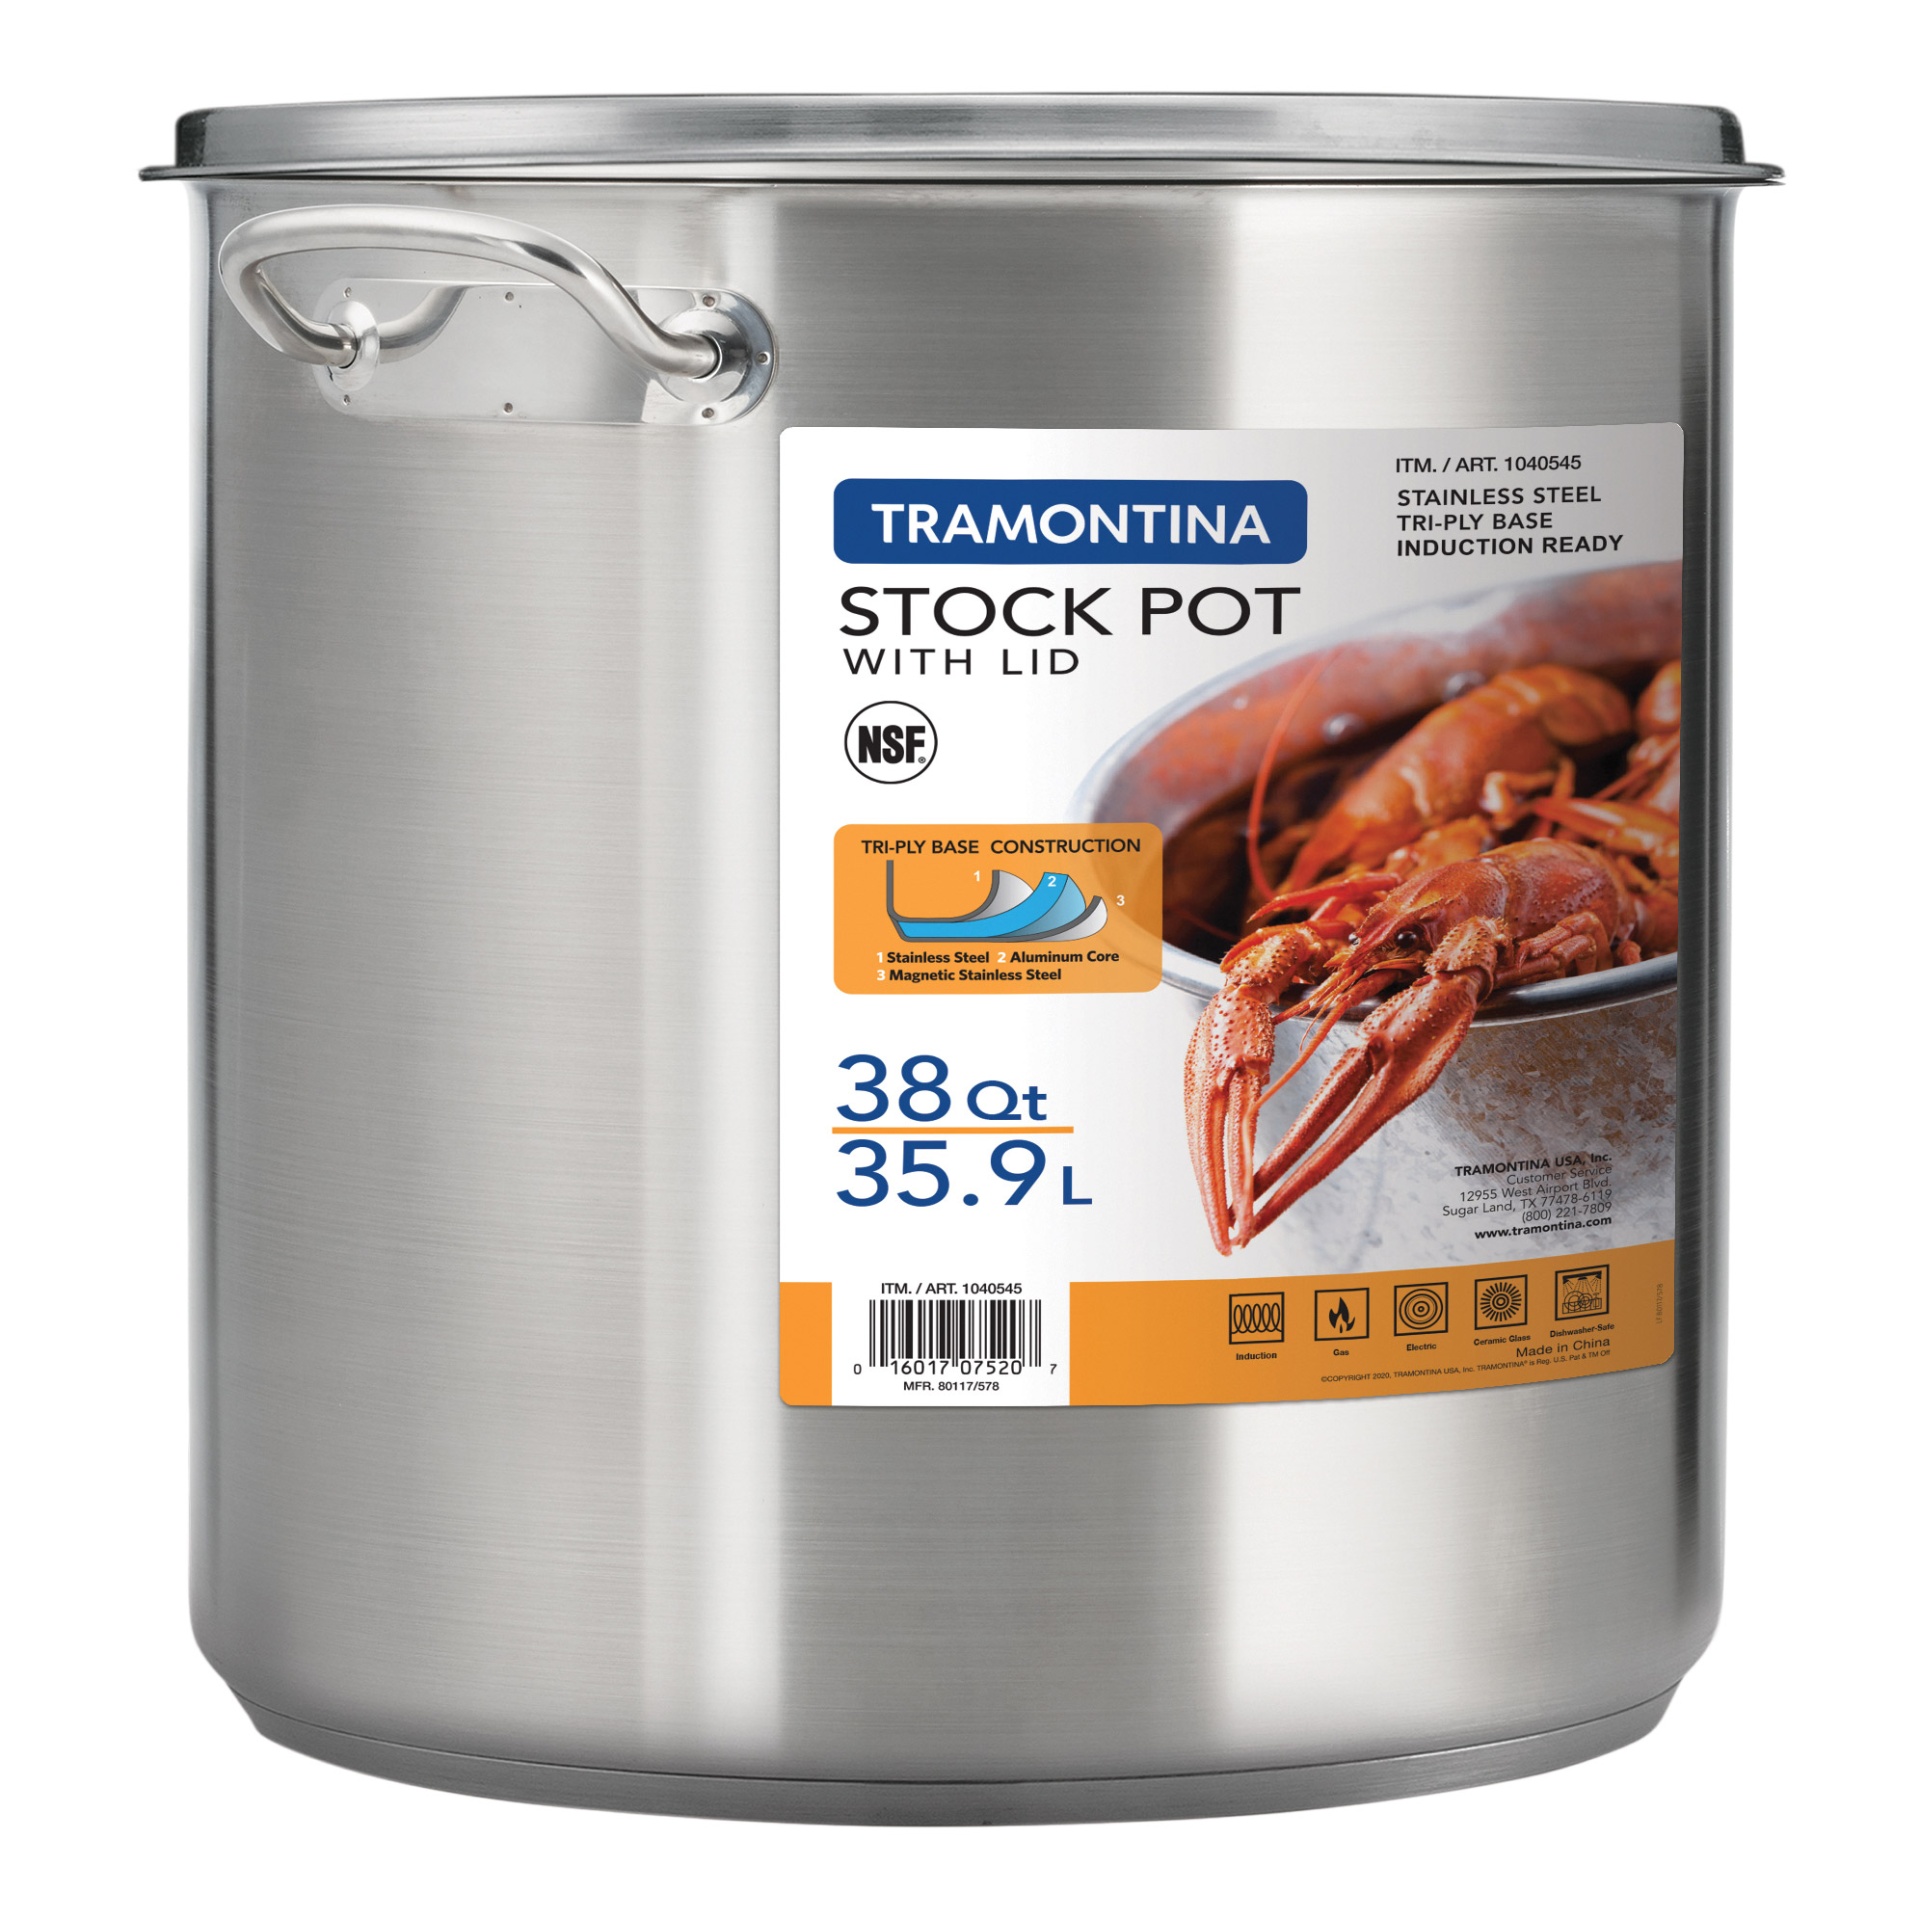 Tramontina Stock Pot with Lid 38 qt